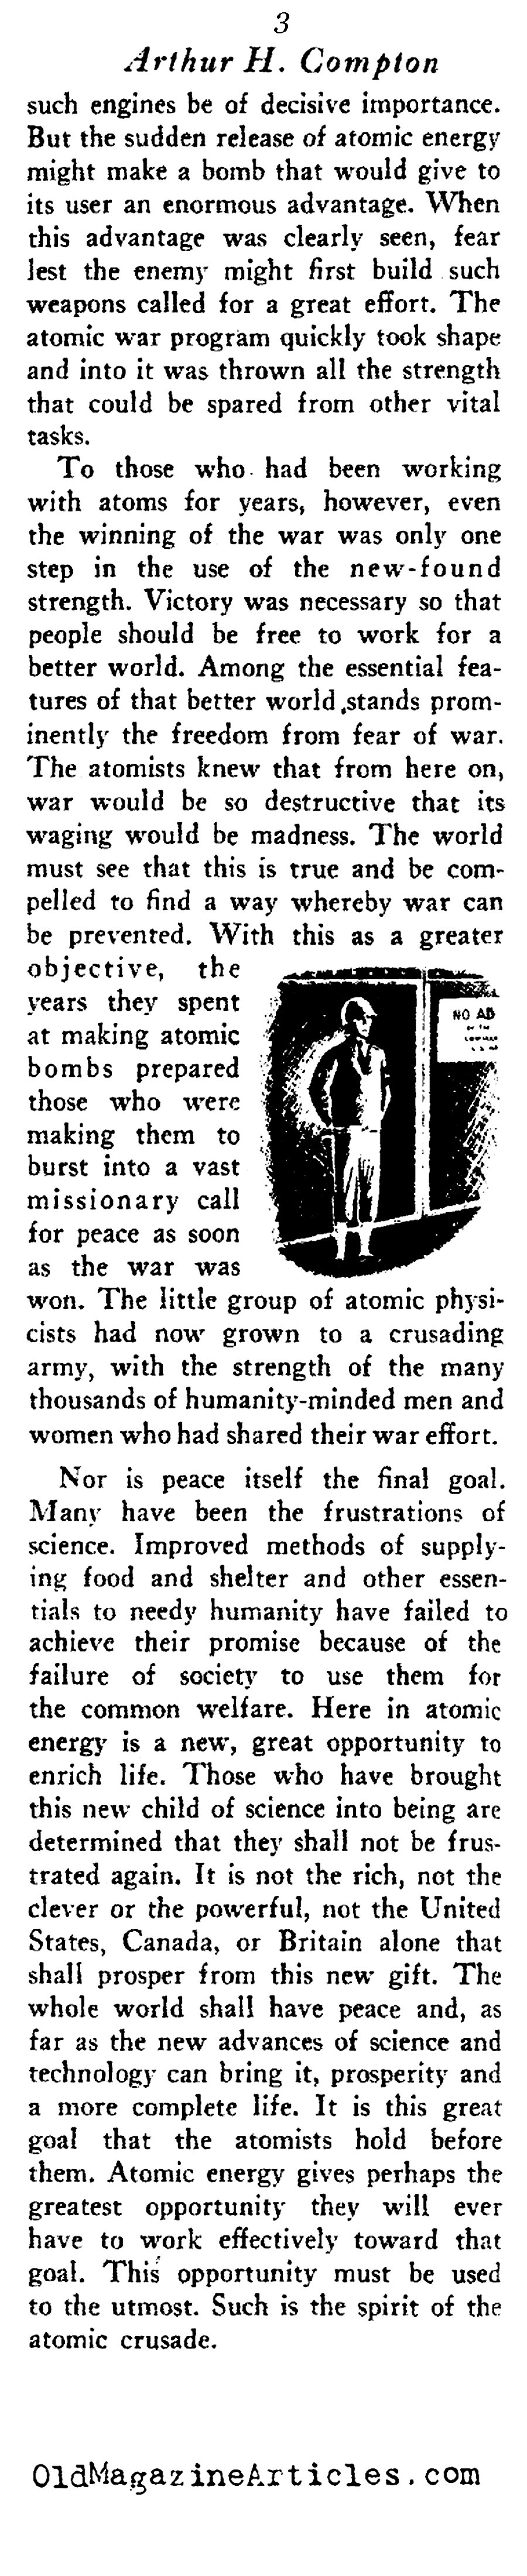 The Atomic Crusade (Rob Wagner's  Script Magazine, 1948)